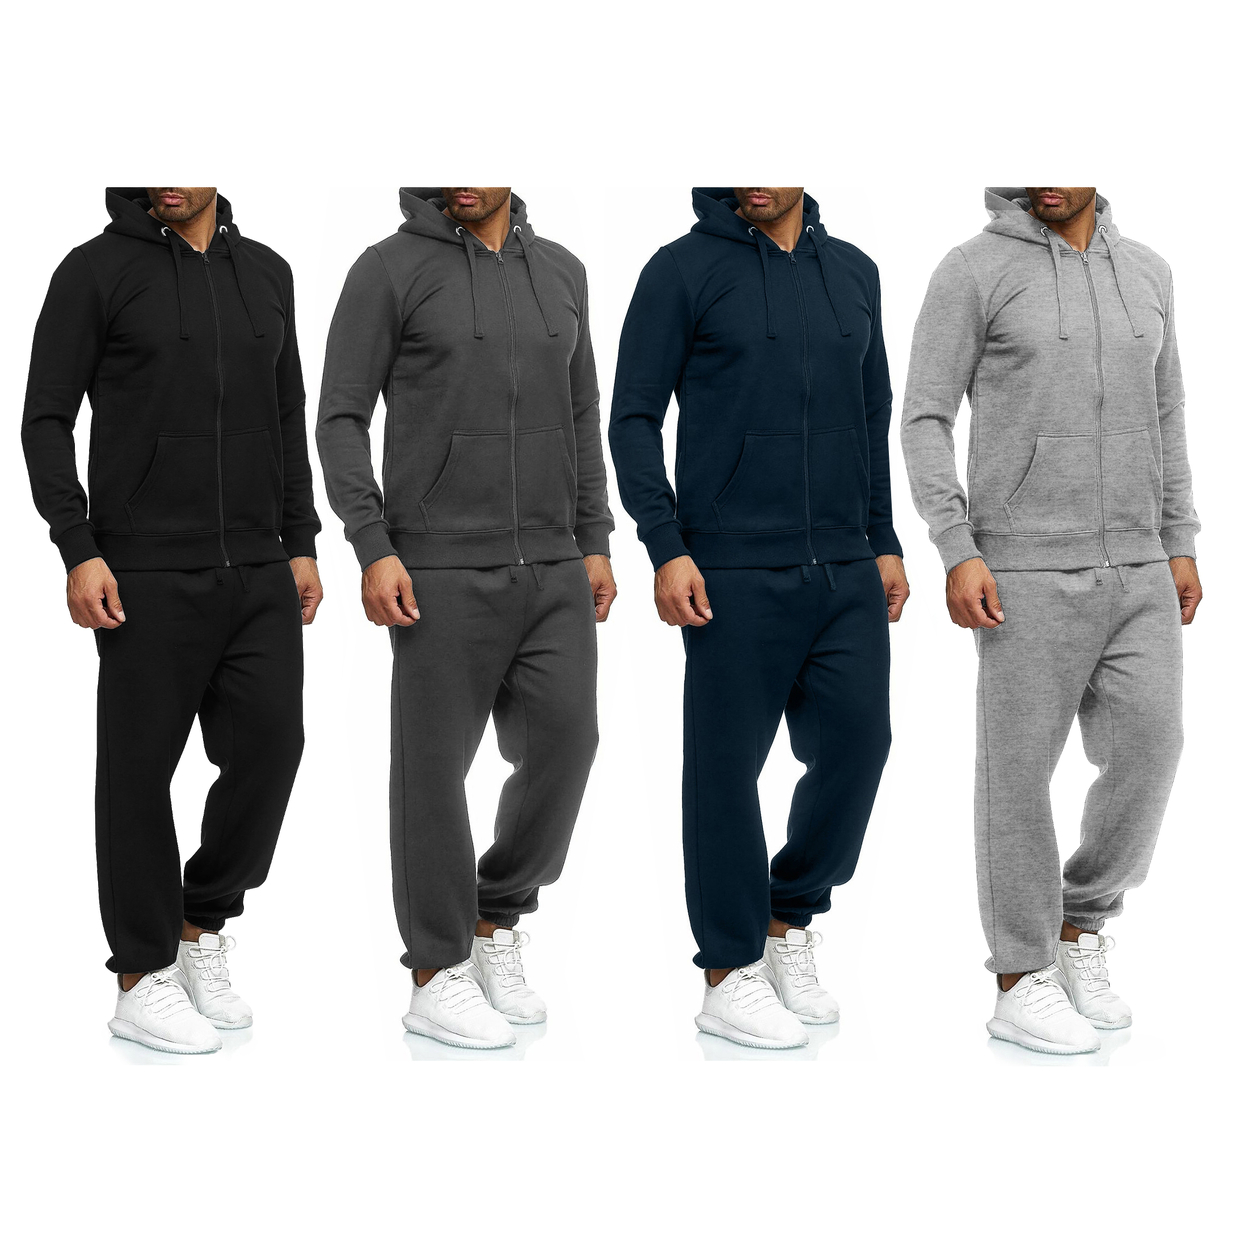 2/4-Piece: Men's Winter Warm Cozy Athletic Multi-Pockets BIG & TALL Sweatsuit Set - Grey, 1, Small